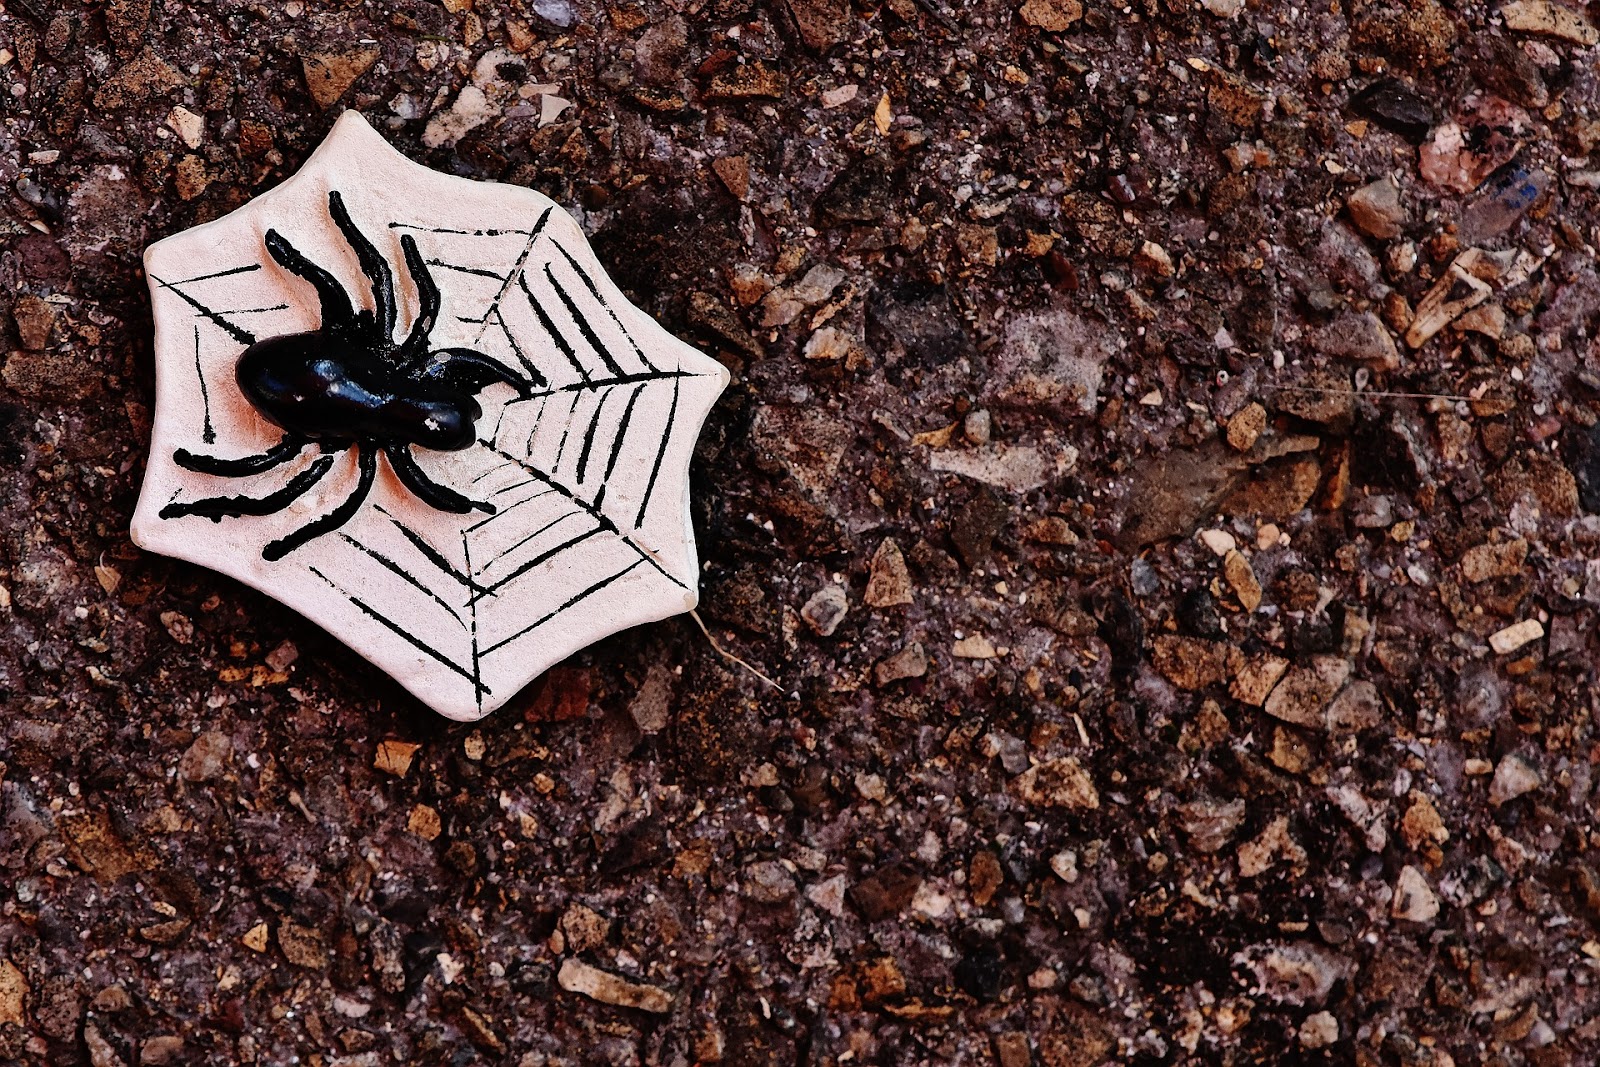 A spider Halloween decoration on the ground